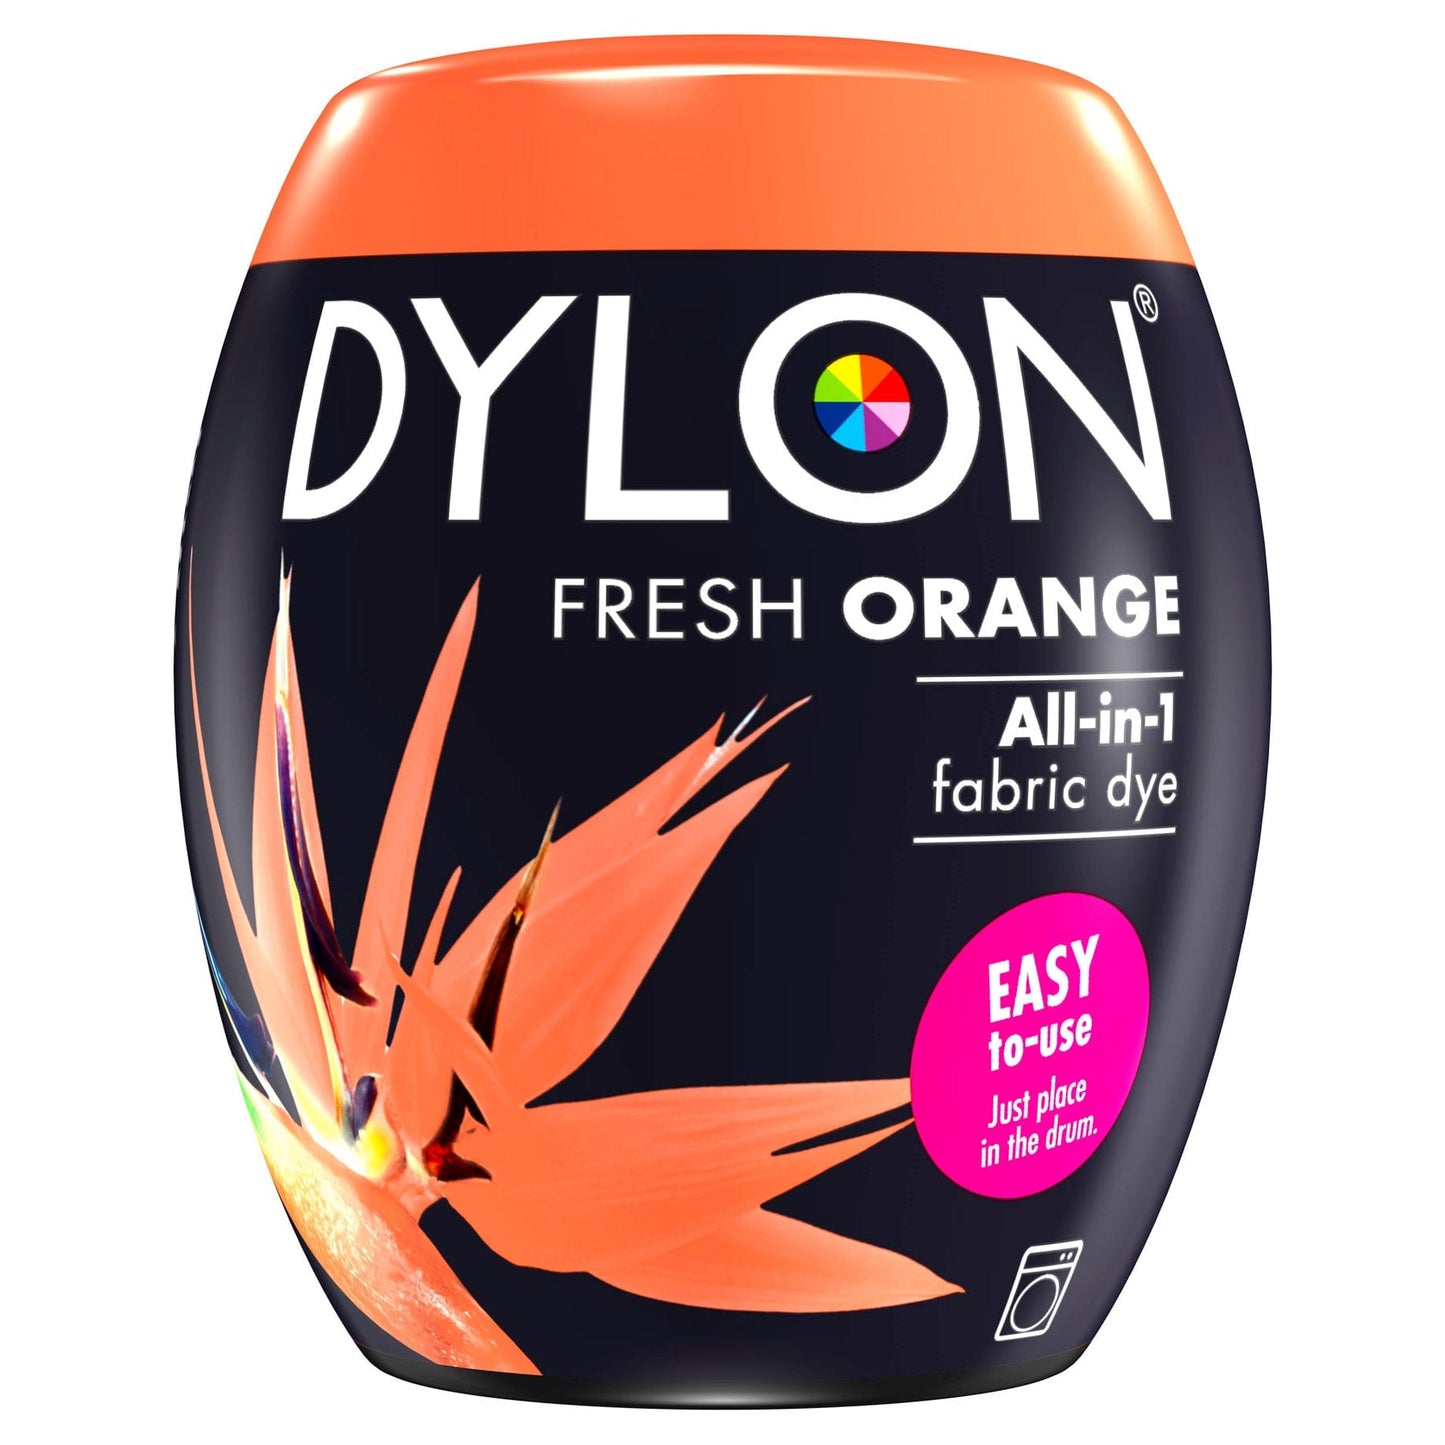 Dylon All-in-One Machine Dye for Fabric in Fresh Orange